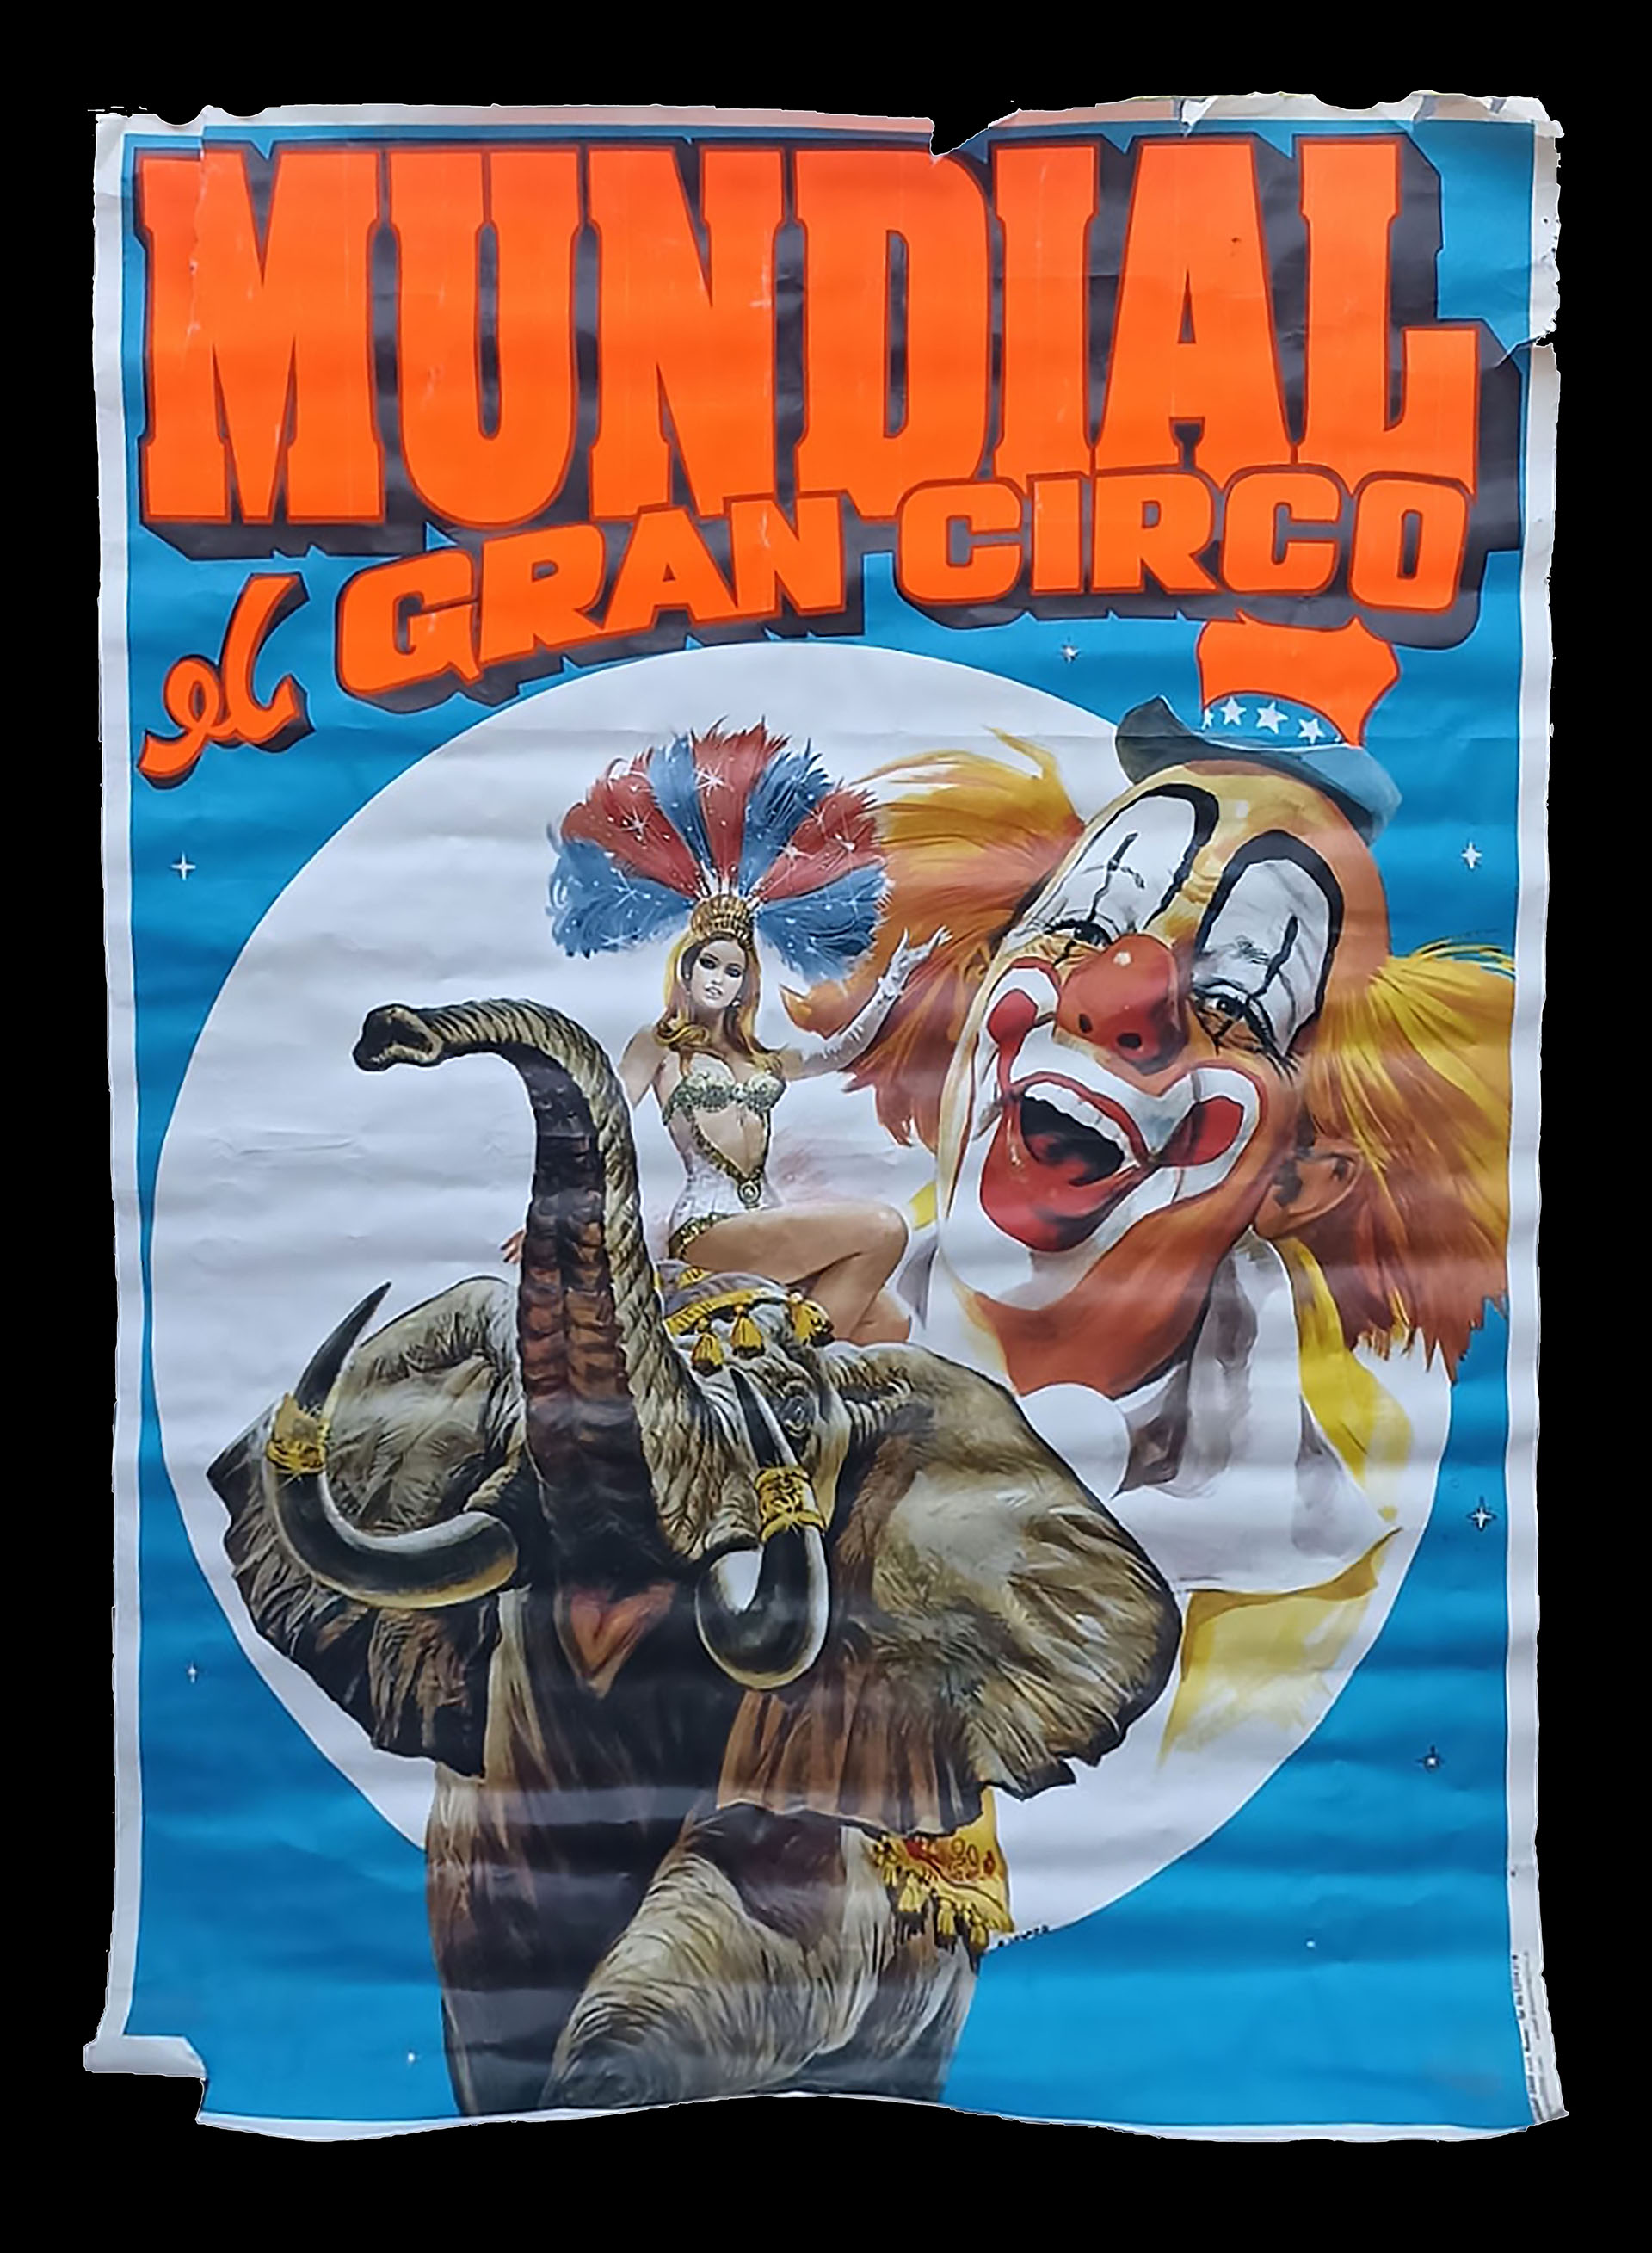 El Gran Circo Mundial. 138x99 cm. Elmograf2000 srl